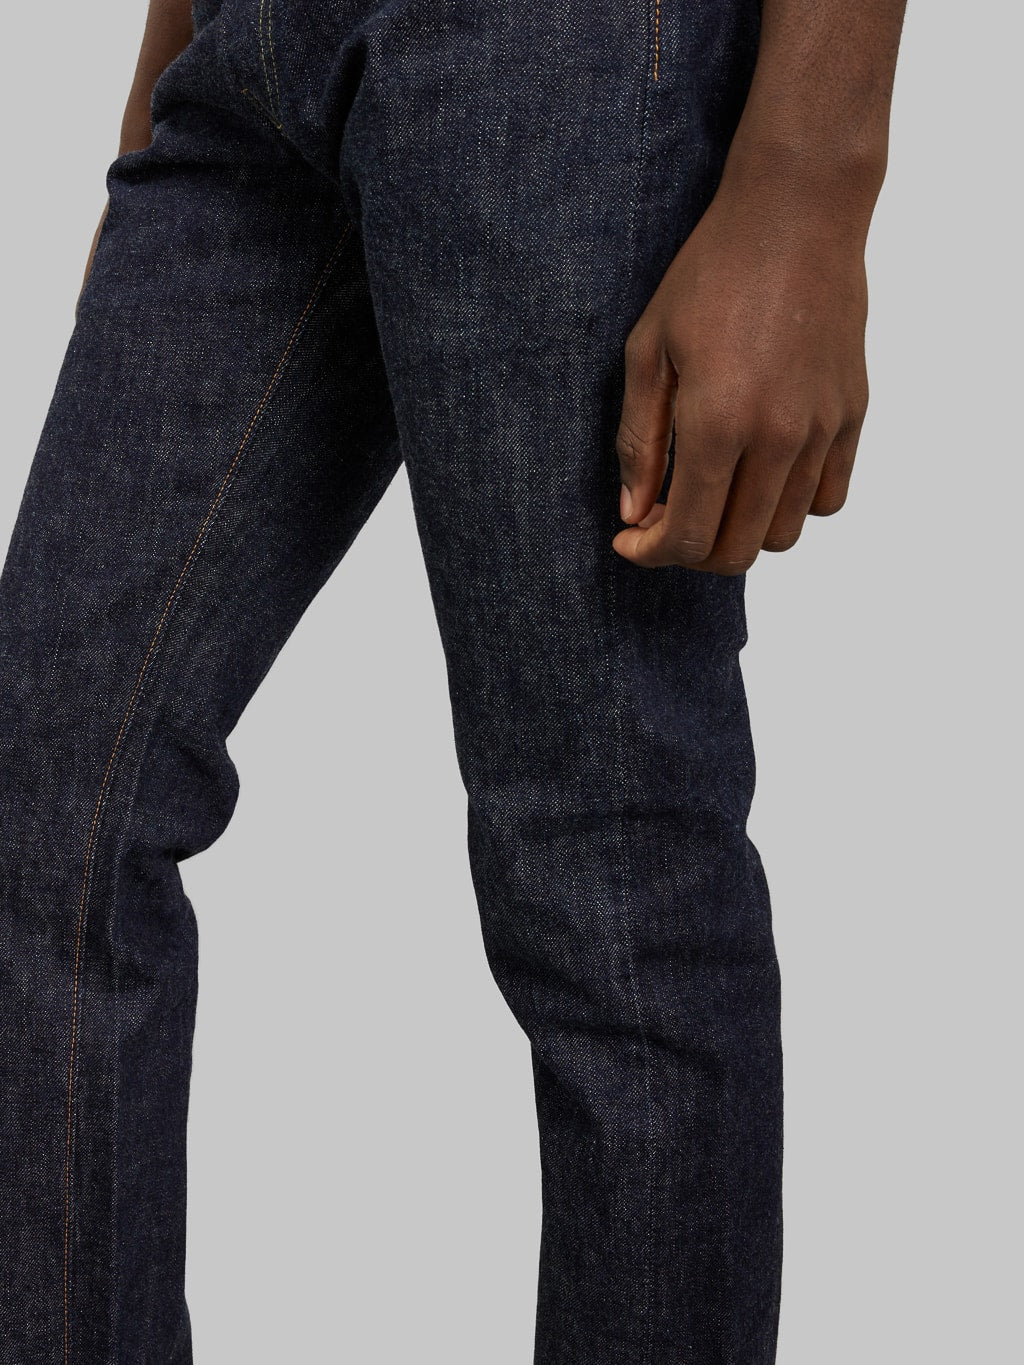 tcb jeans slim 50s selvedge japanese denim inseam